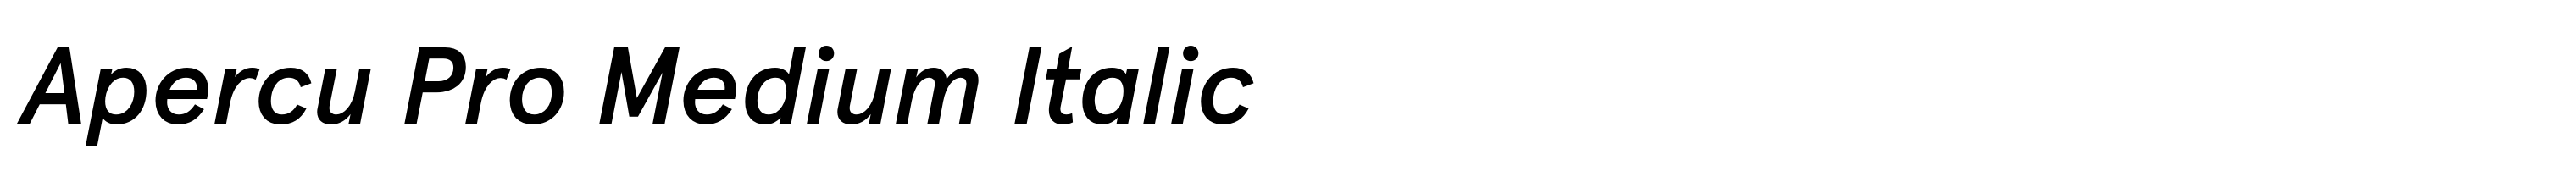 Apercu Pro Medium Italic